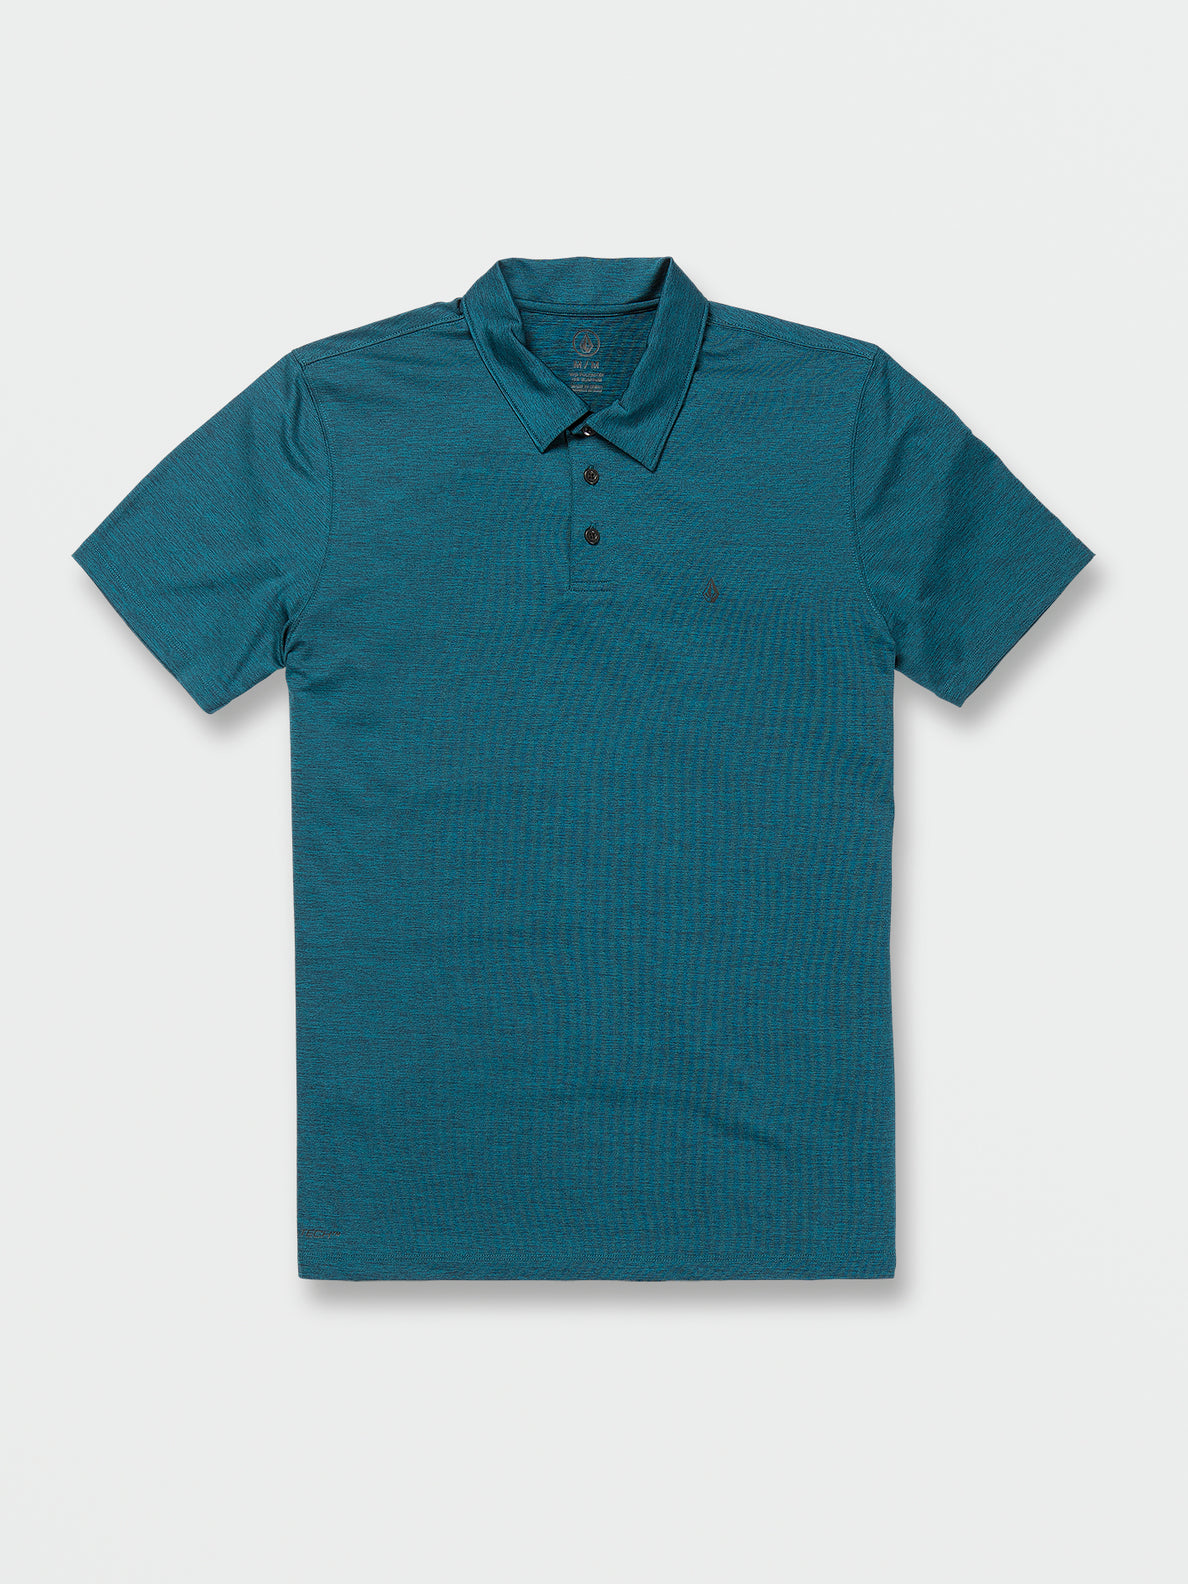 Hazard Pro Polo Short Sleeve Shirt - Ocean Teal